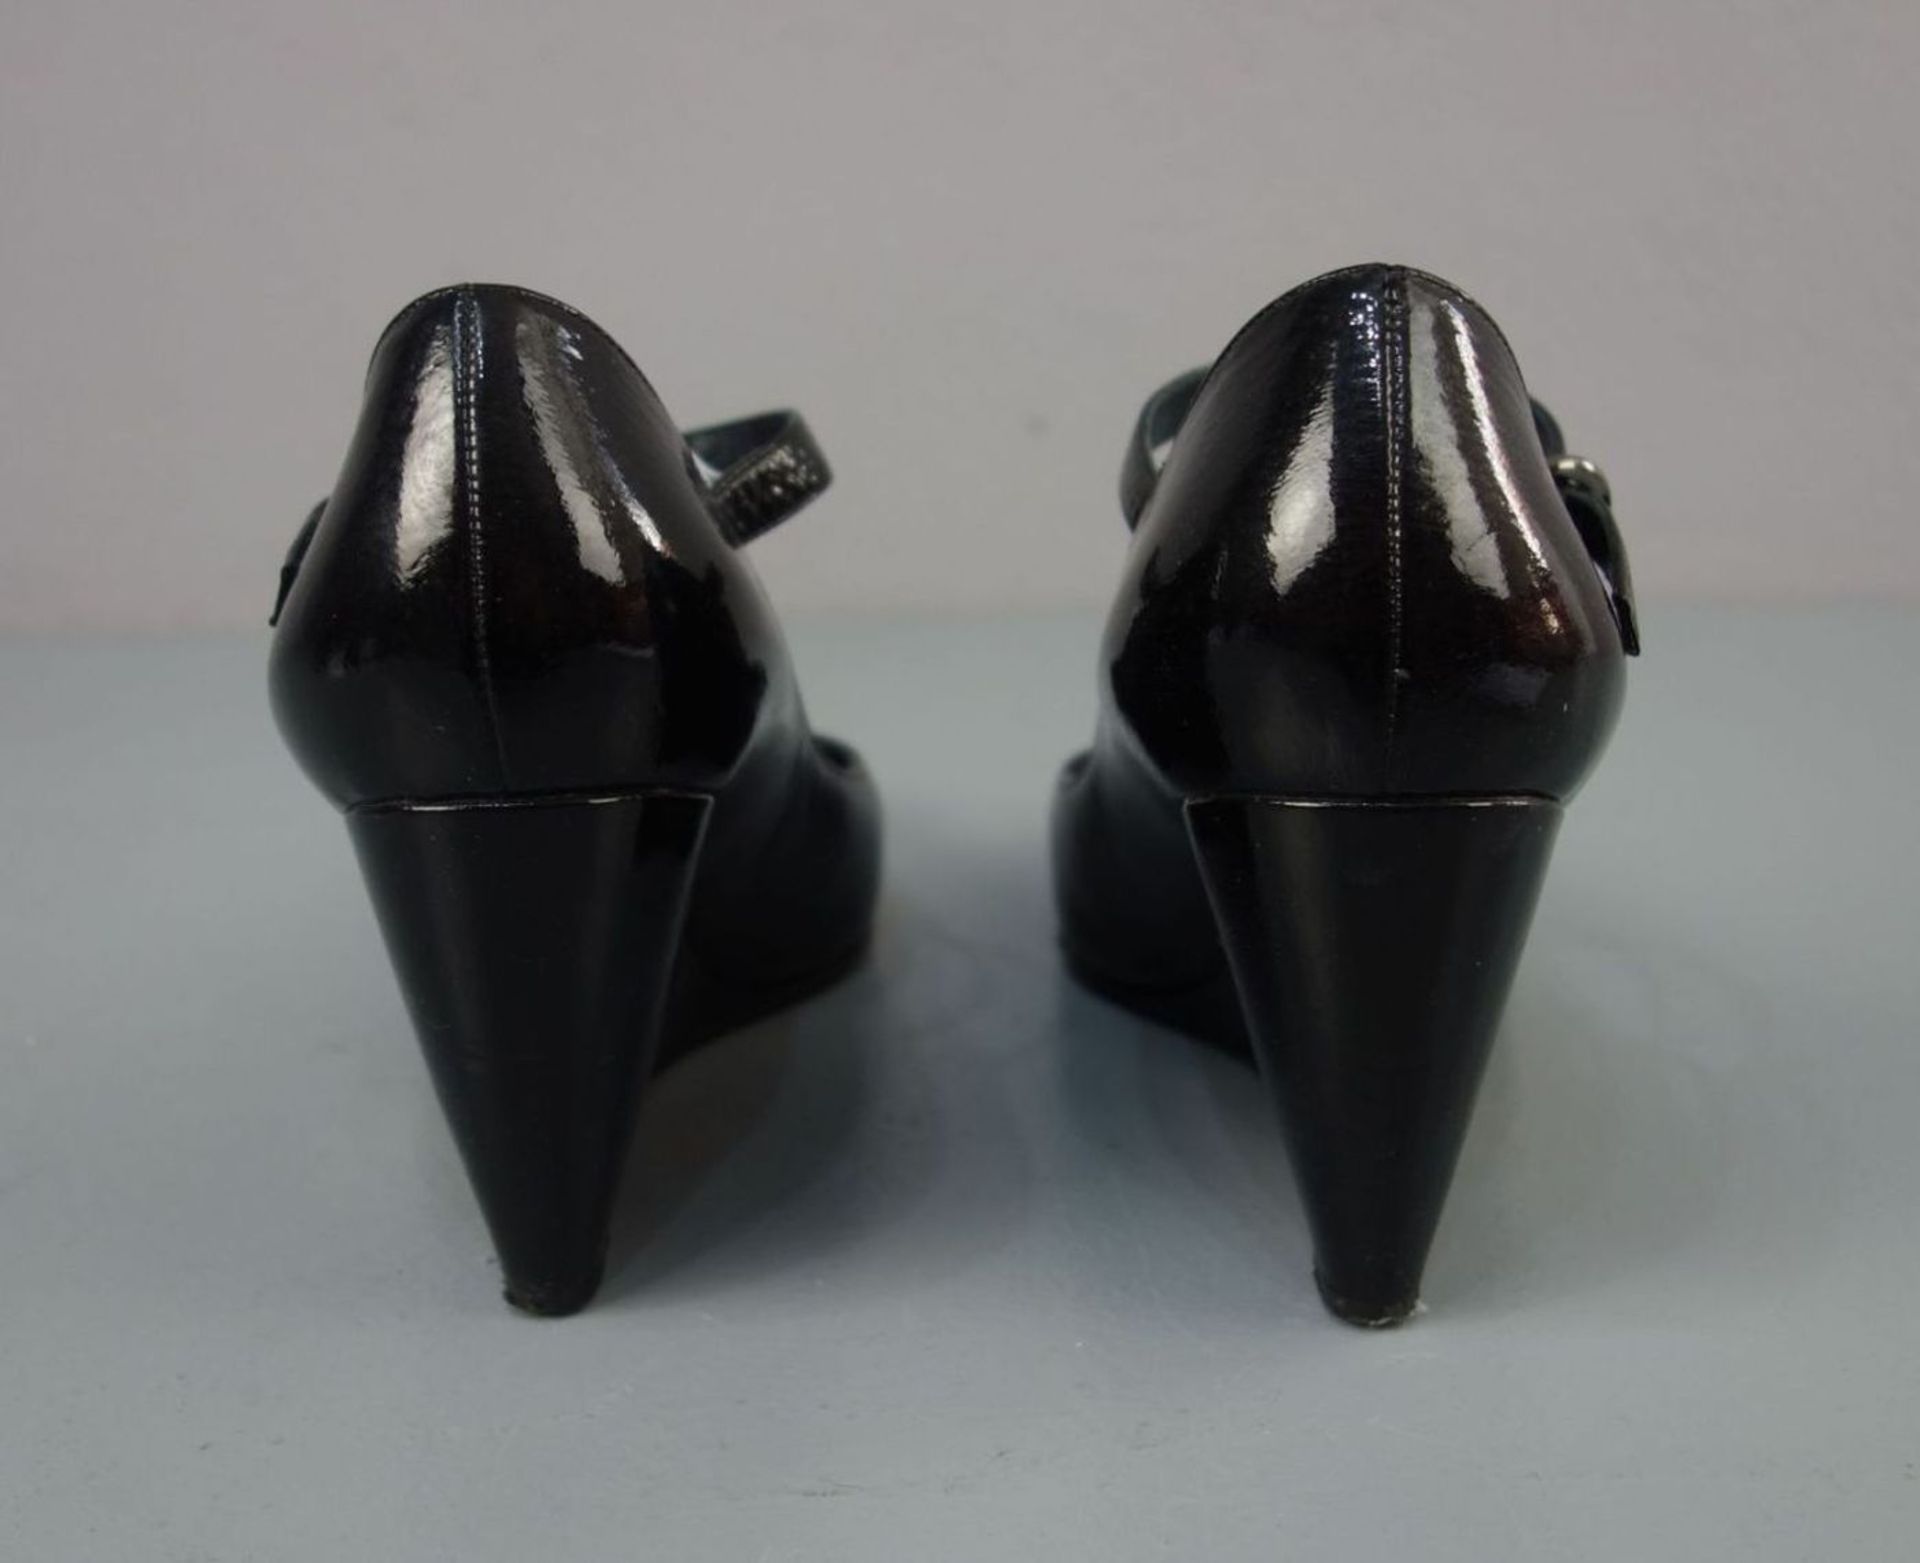 SERGIO ROSSI KEILPUMPS / women's shoes with wedge heel, Made in Italy, schwarzes Lackleder. Pumps - Bild 3 aus 6